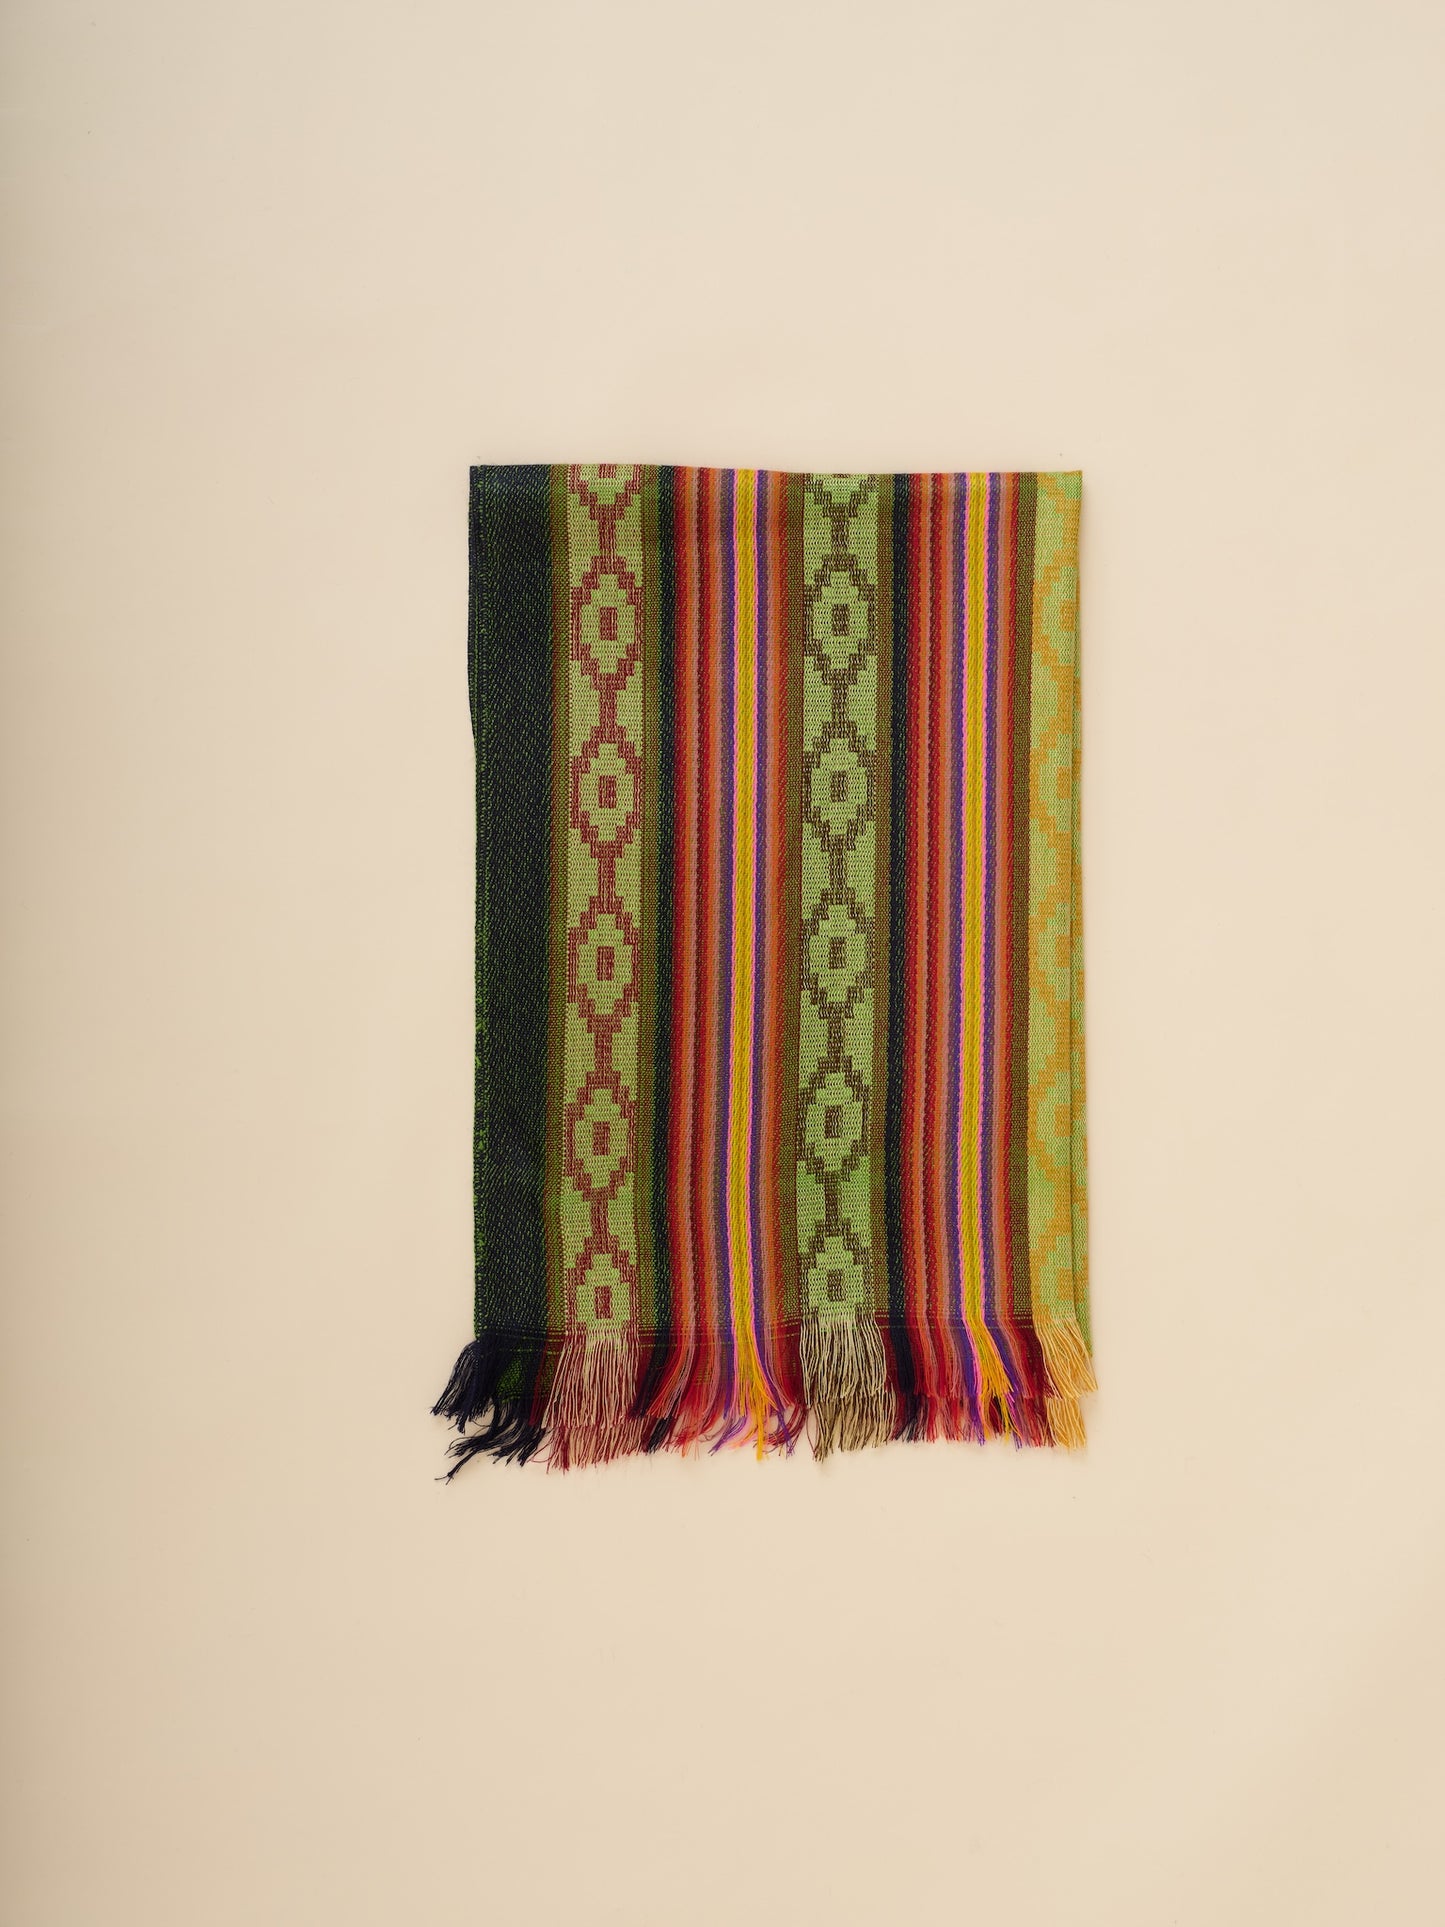 Incan patterned handwoven Ikat scarves